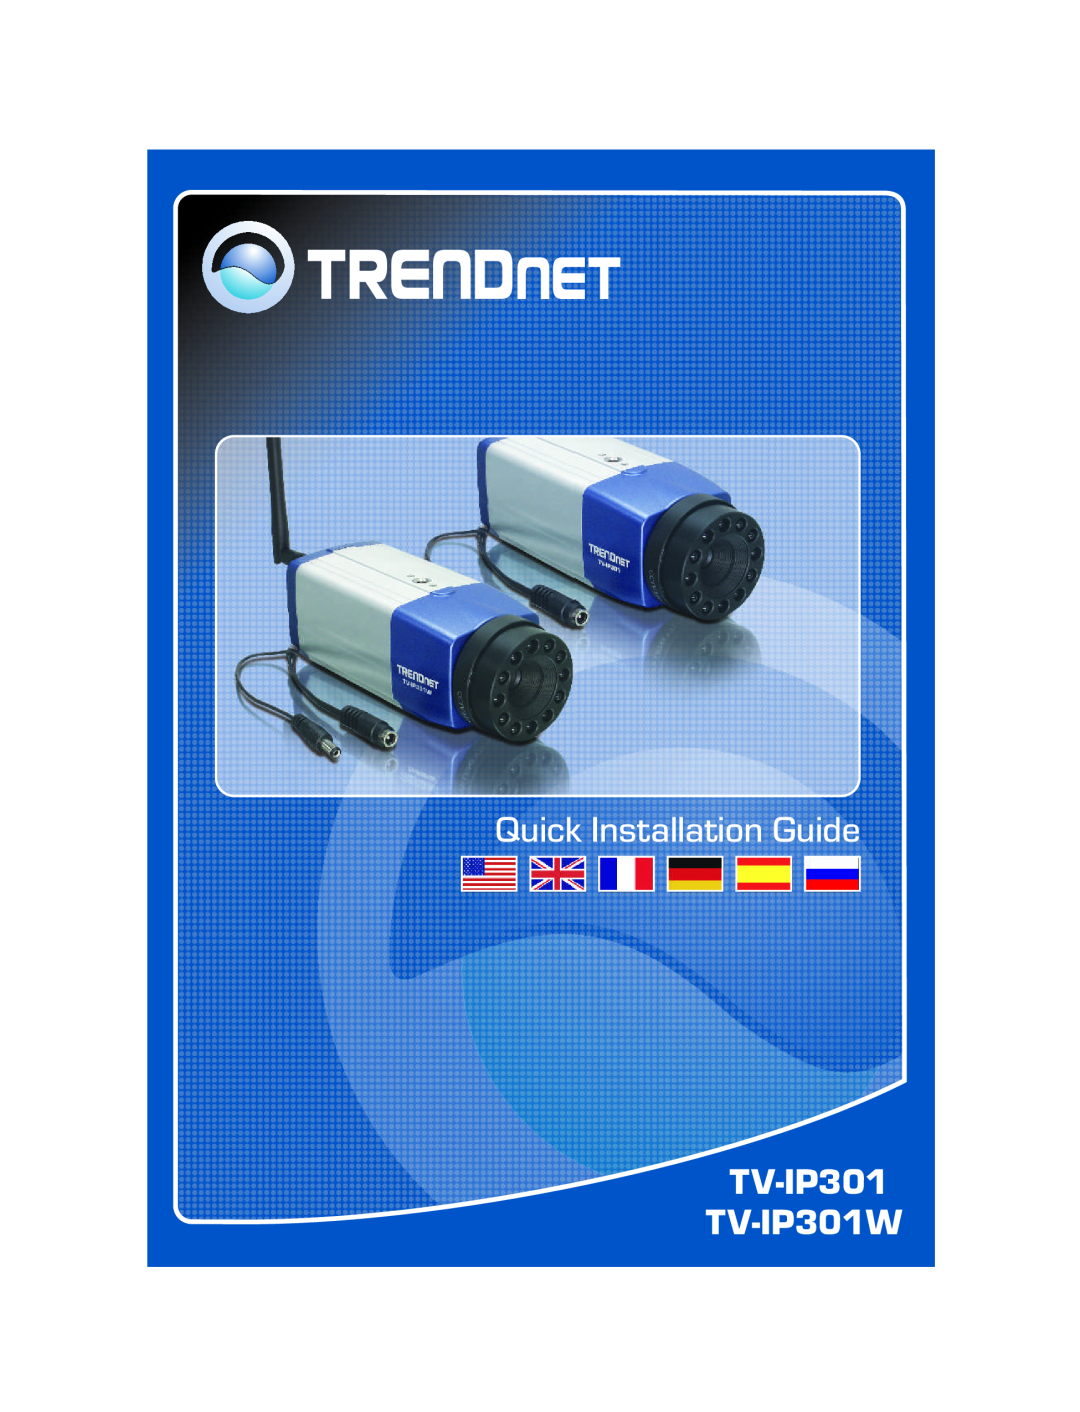 TRENDnet TE100-MP1UN V1, TRENDNET manual Quick Installation Guide 